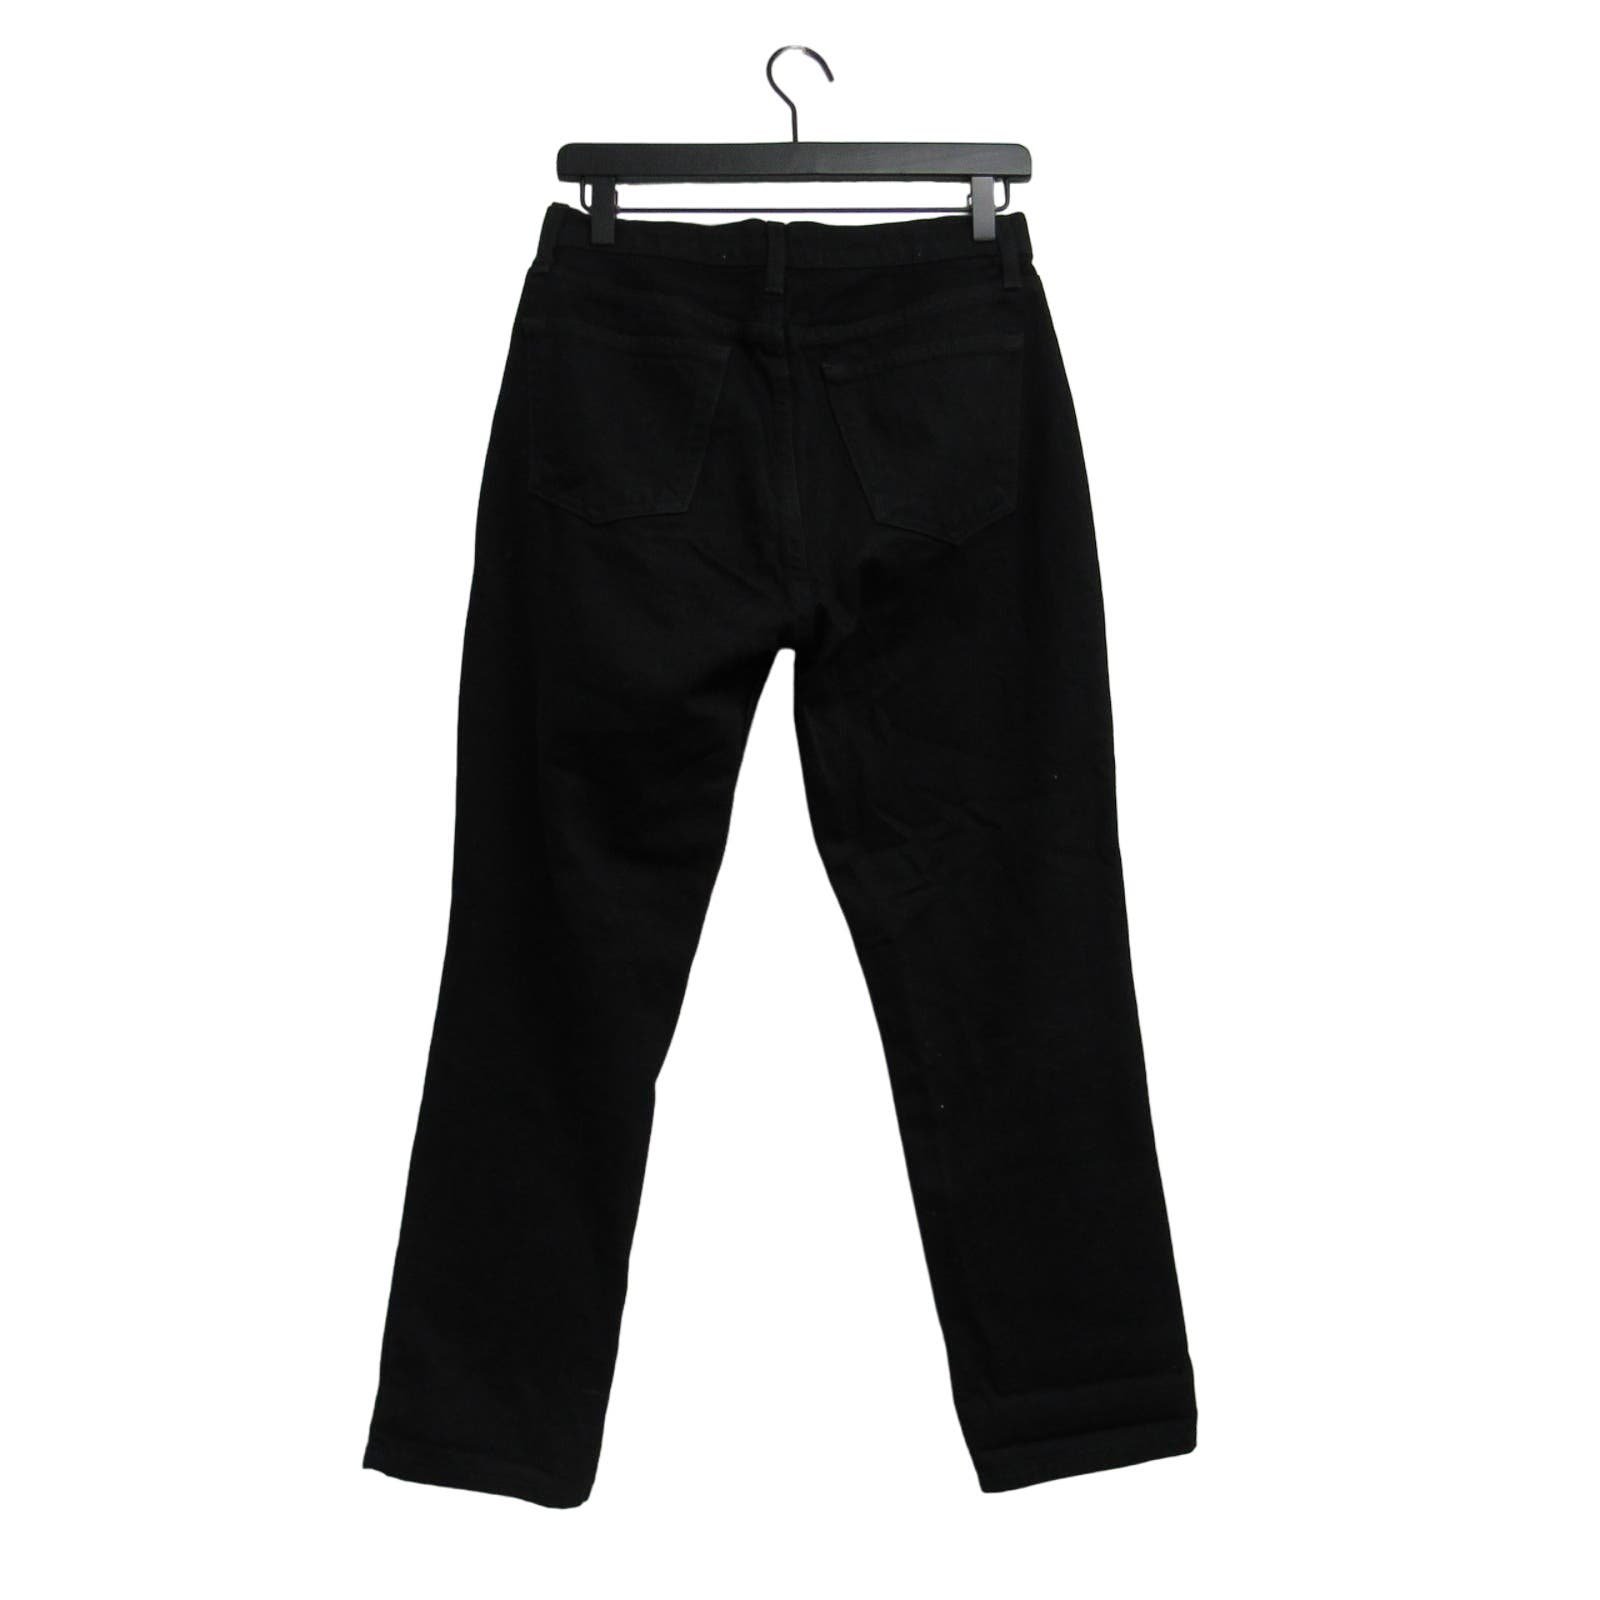 high discount REFORMATION Julia High Waist Cigarette Crop Jeans in Black Size 28 P96PakgVZ outlet online shop